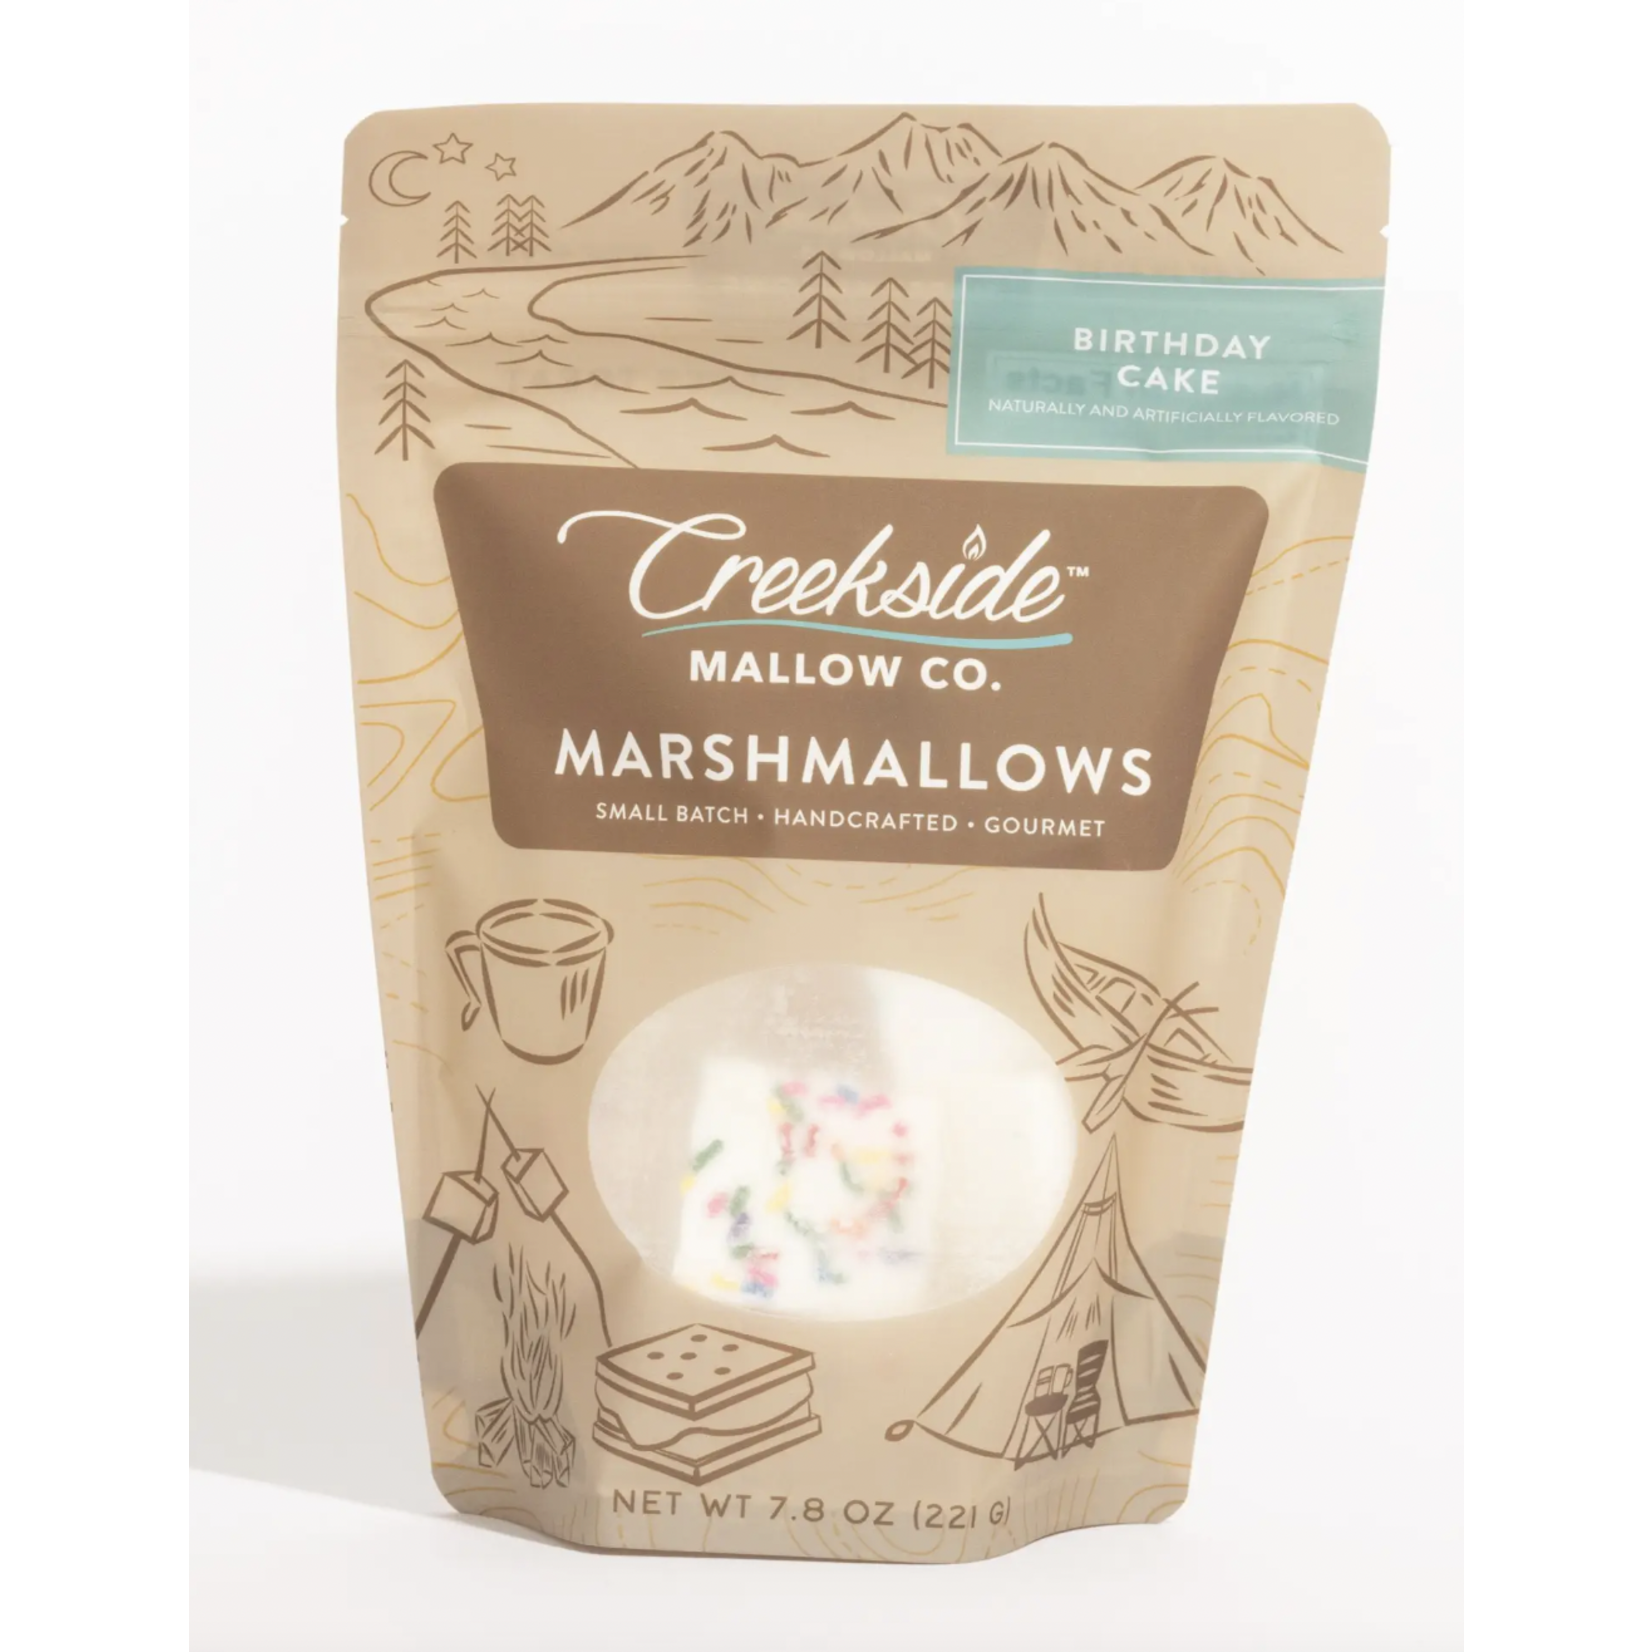 Creekside Mallow Co. / Fireside Mallow Co. Birthday Cake Marshmallow Bag